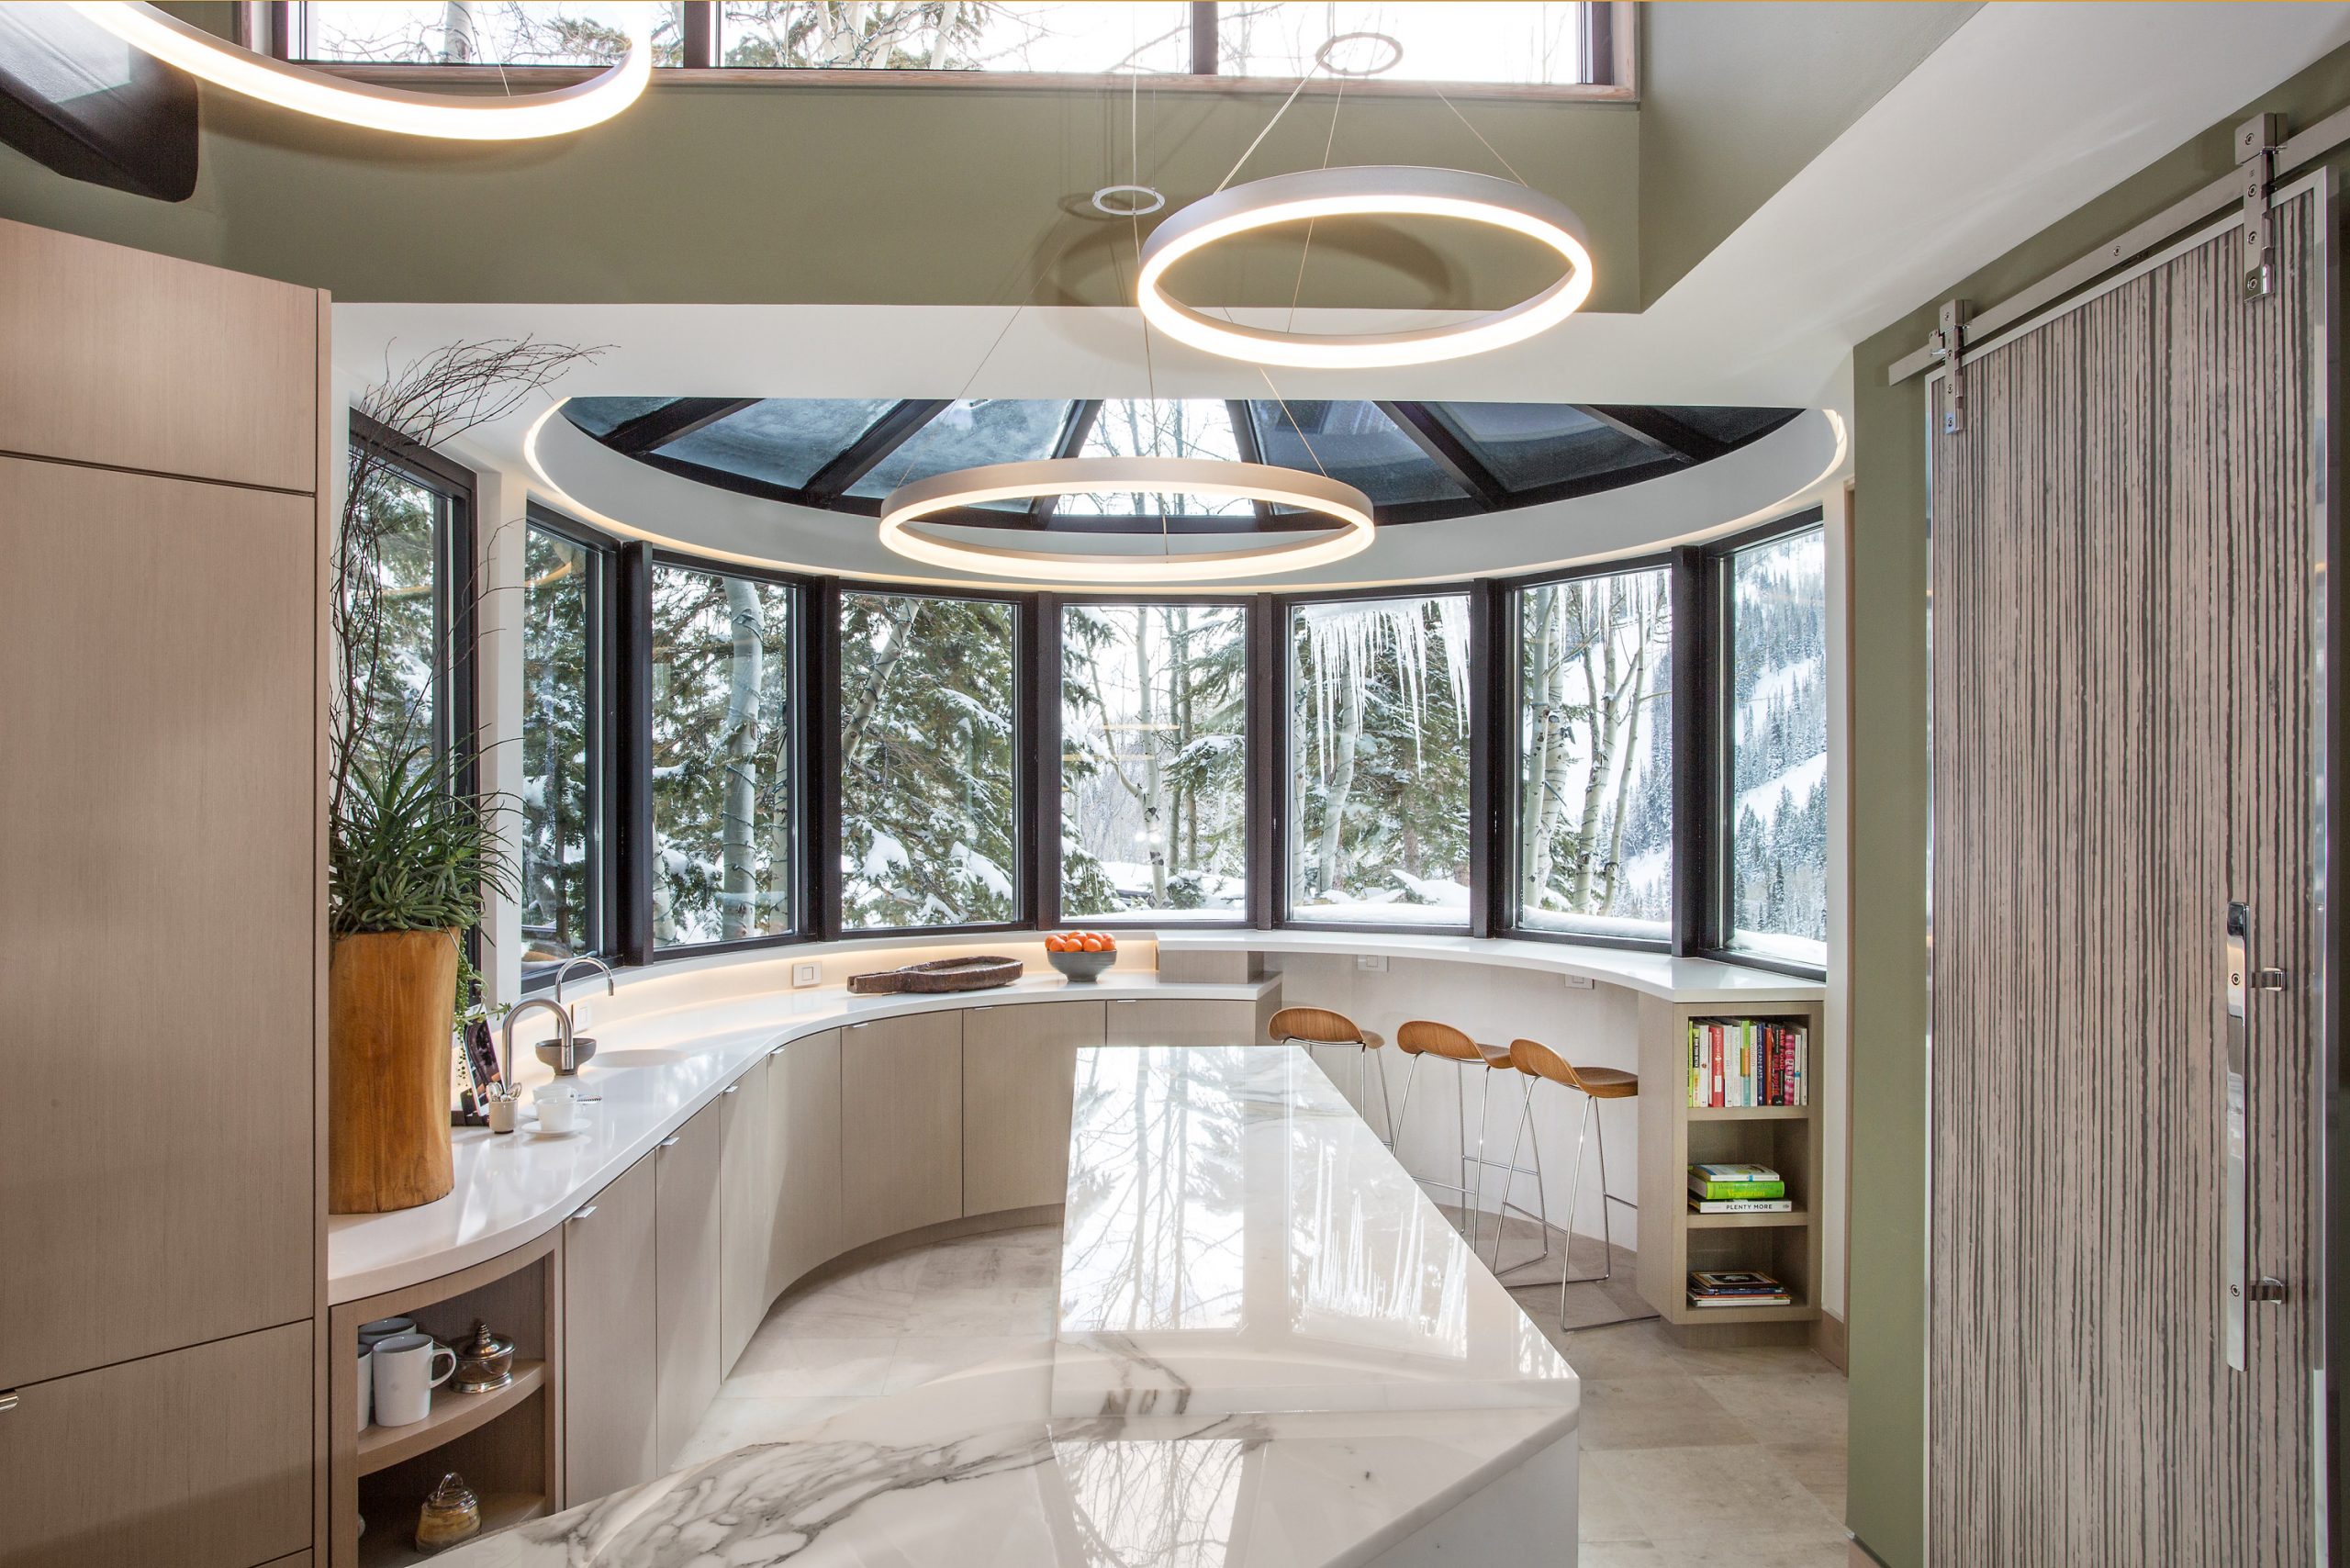 Deer Valley Kitchen Remodel, architecture and interior design by Elliott Workgroup